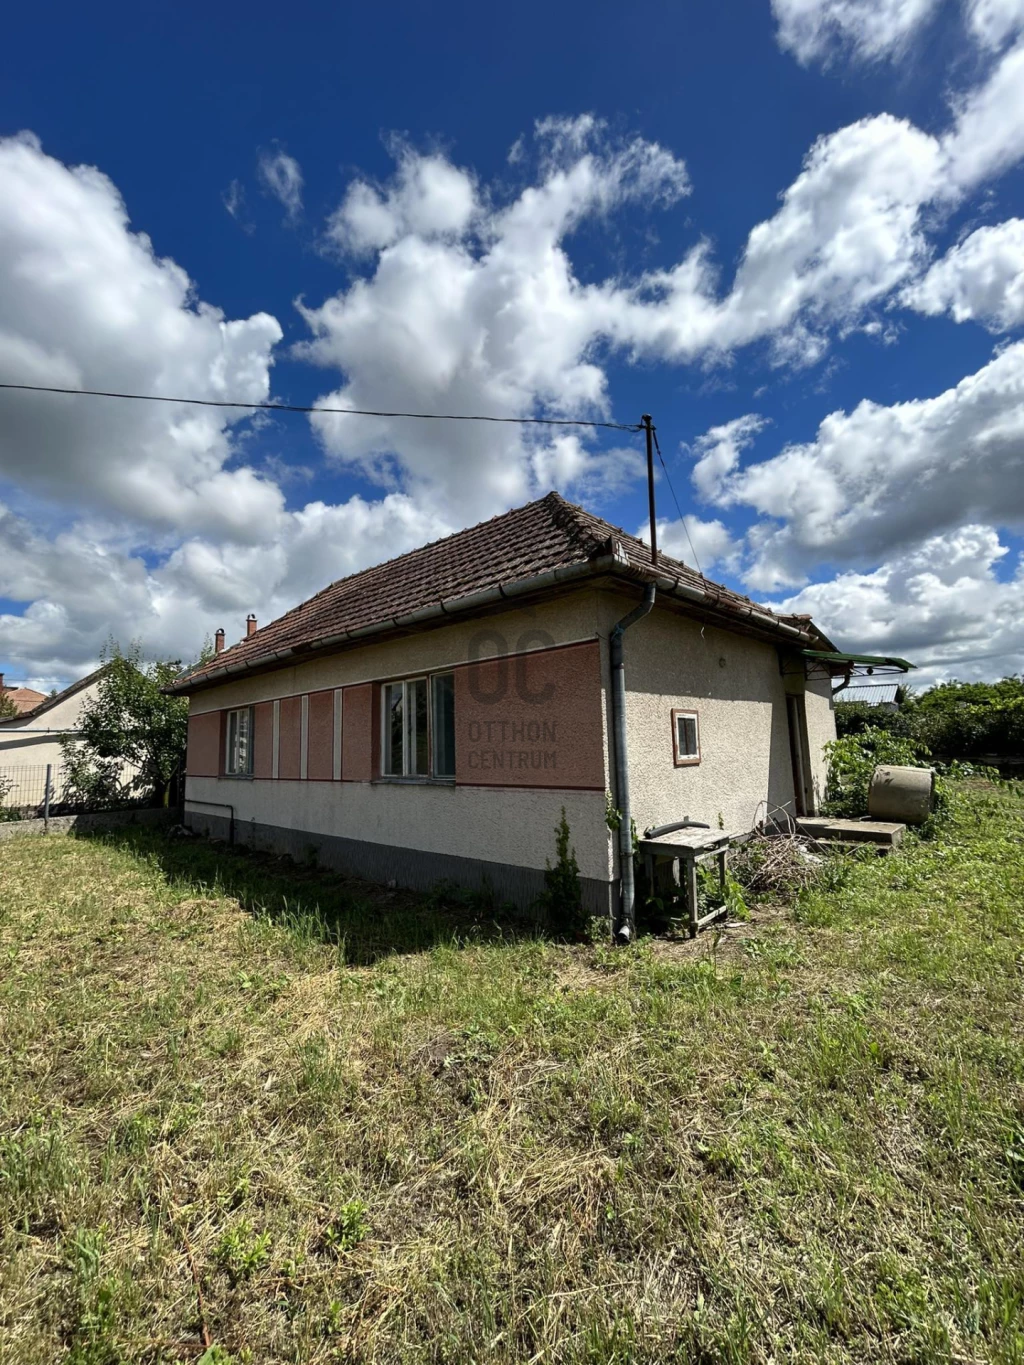 For sale house, Debrecen, Szabadságtelep